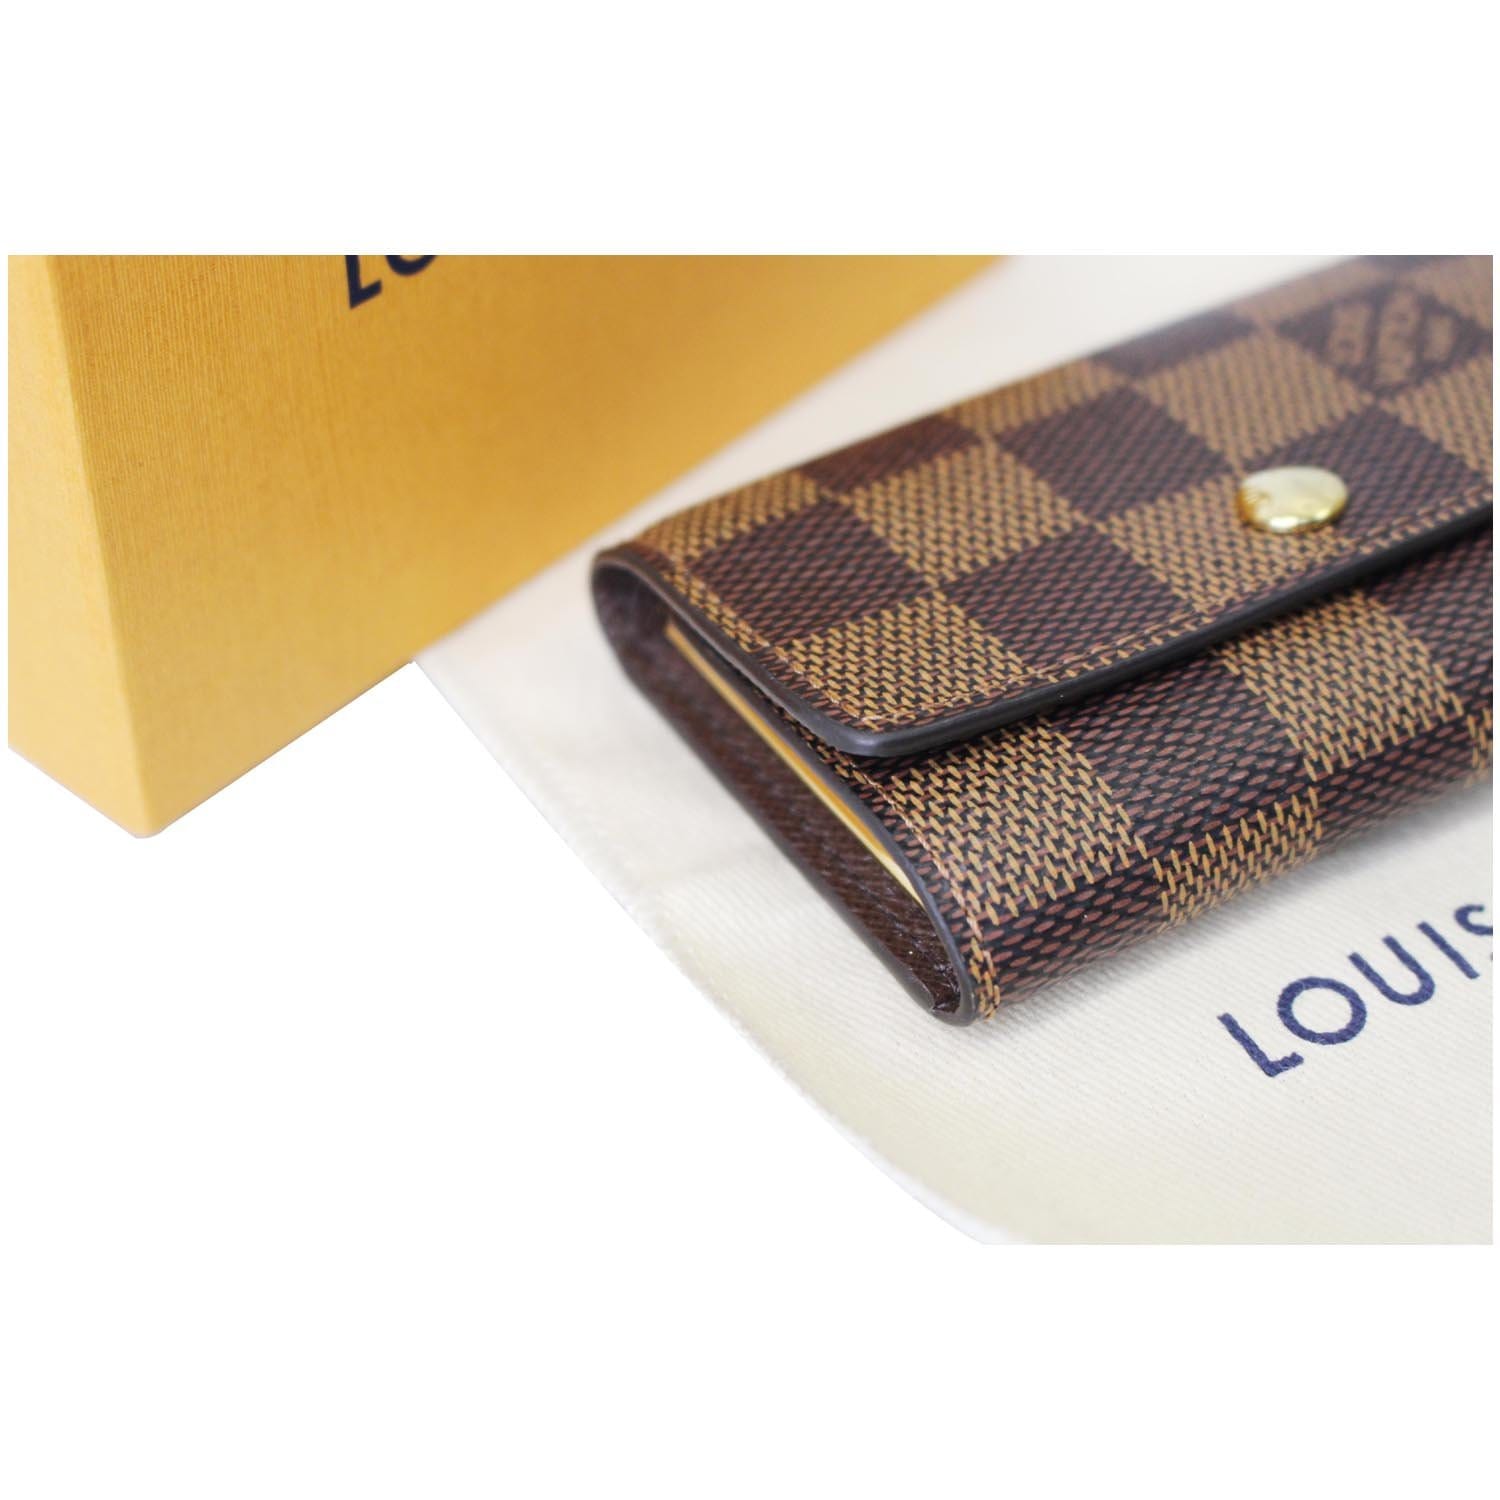 Louis Vuitton Damier Ebene Business Card Holder